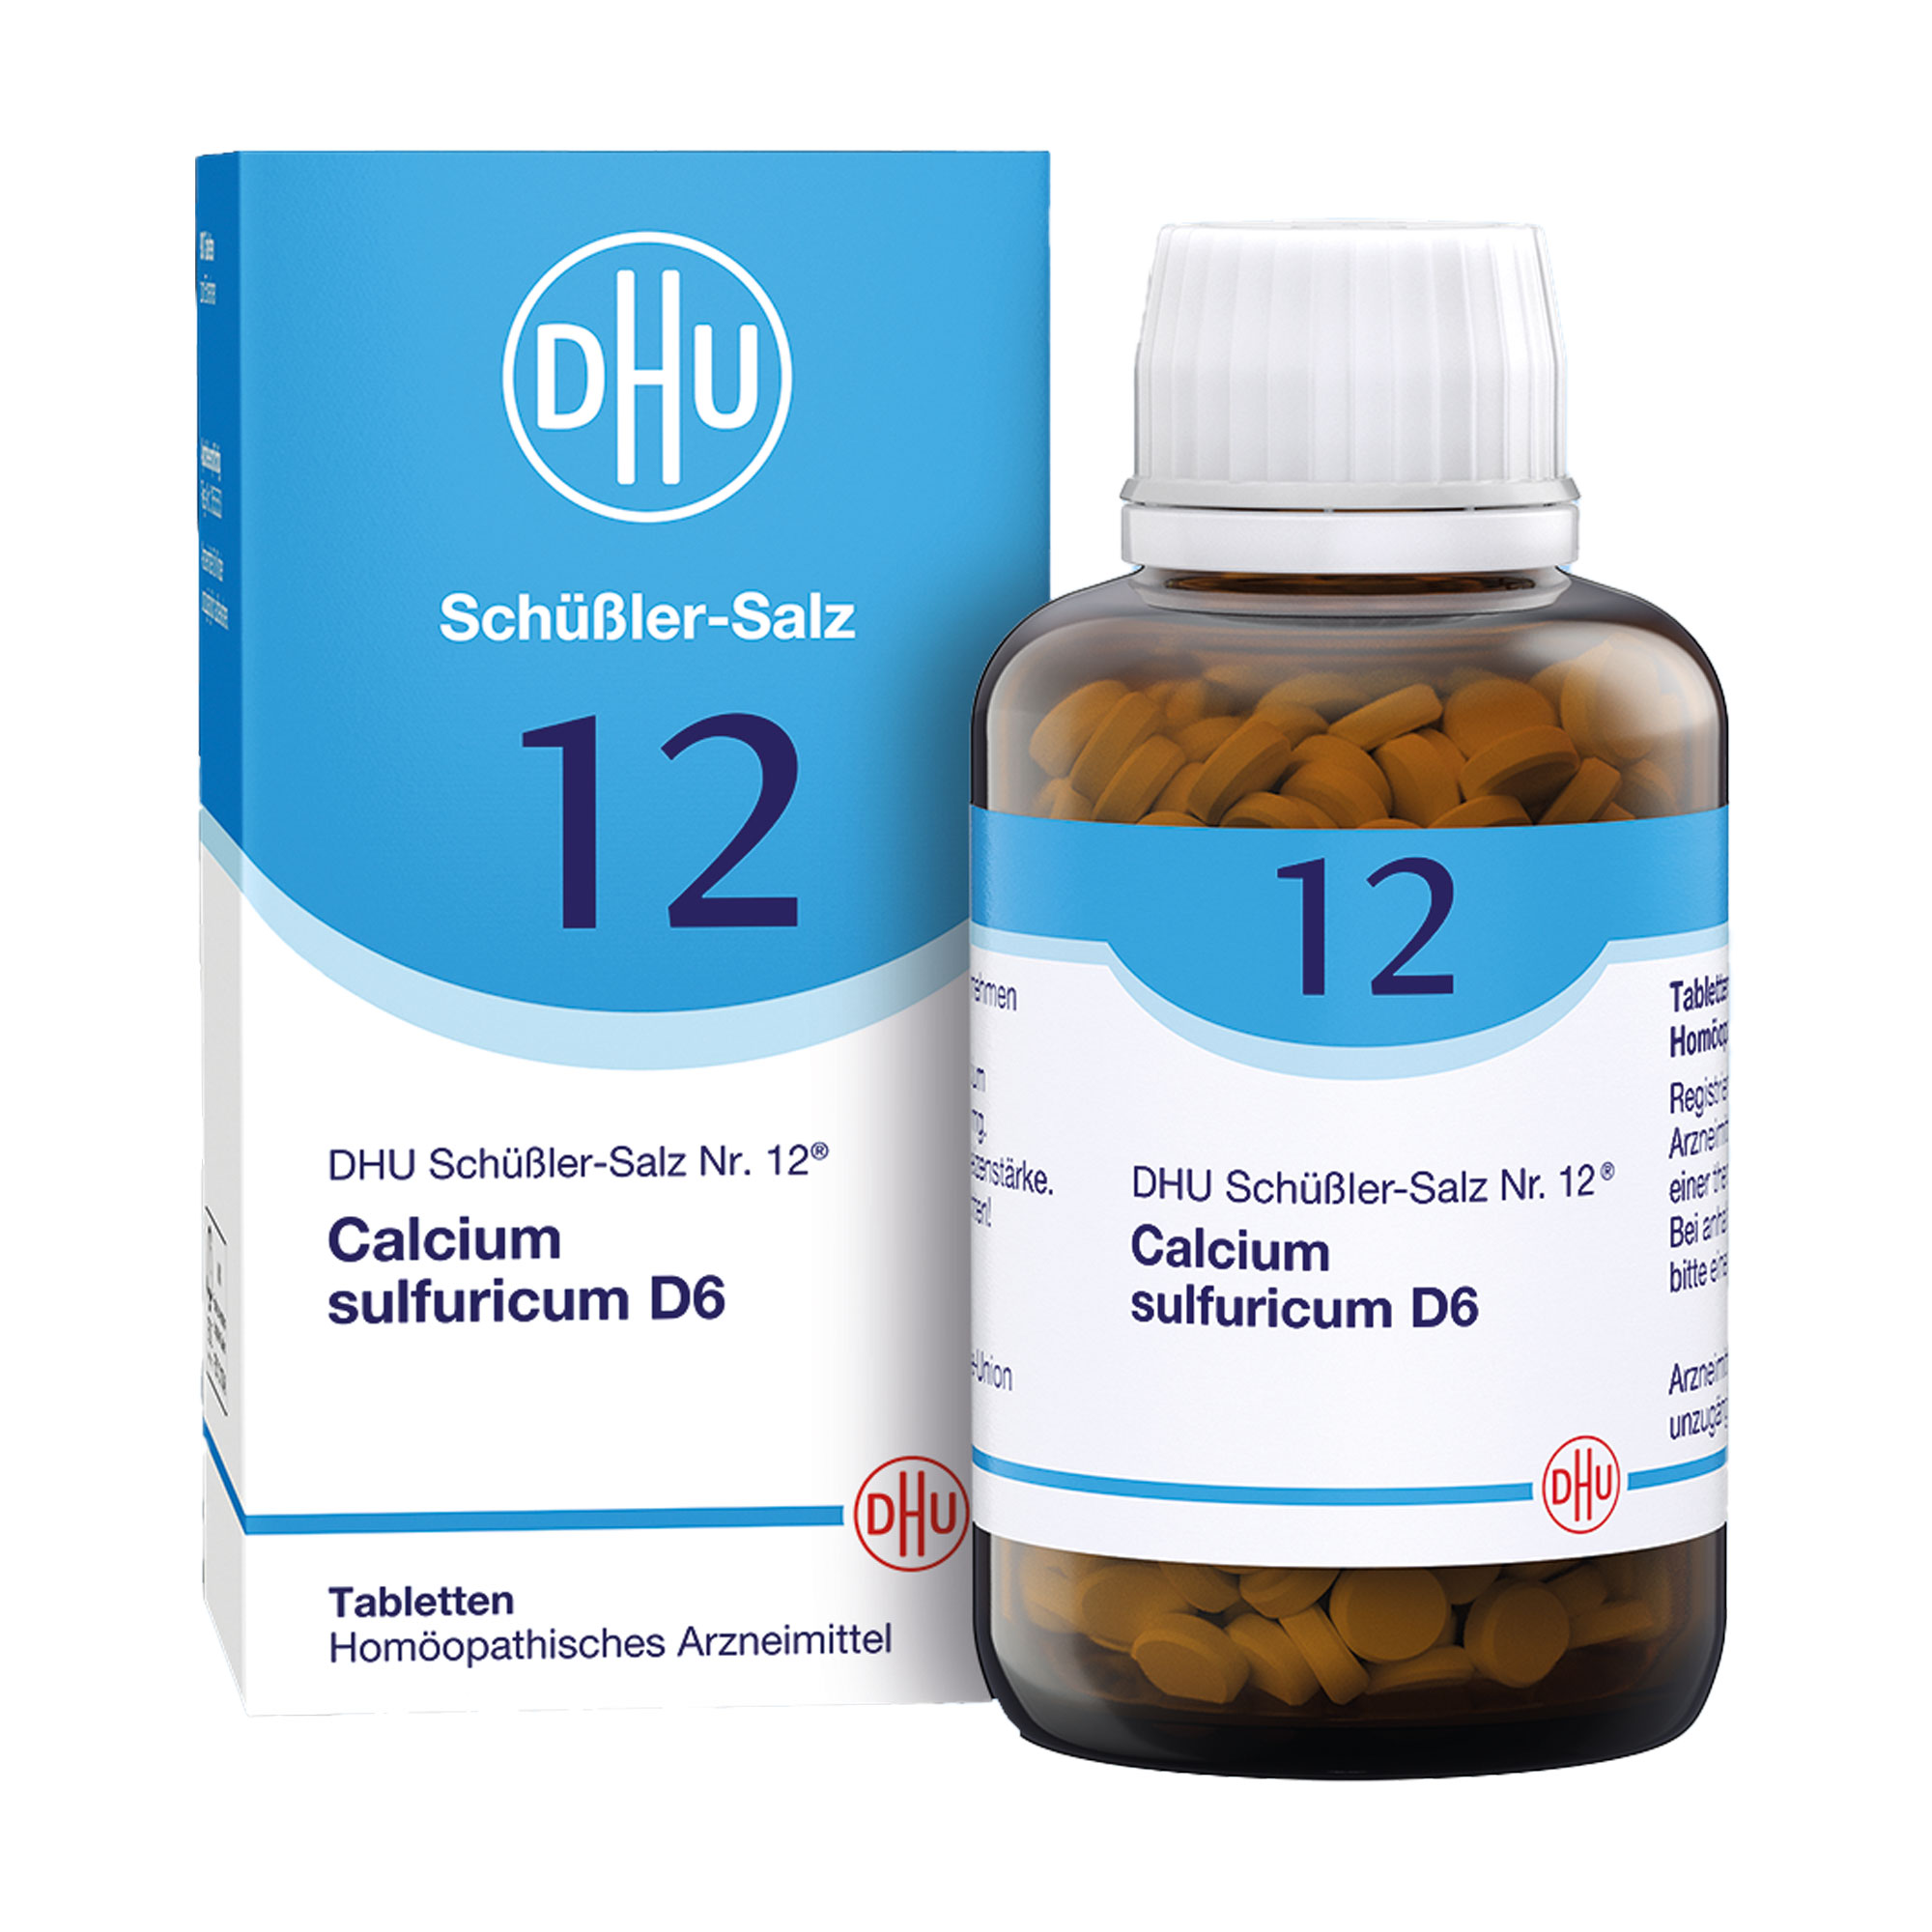 Homöopathisches Arzneimittel mit Calcium sulfuricum Trit. D6.